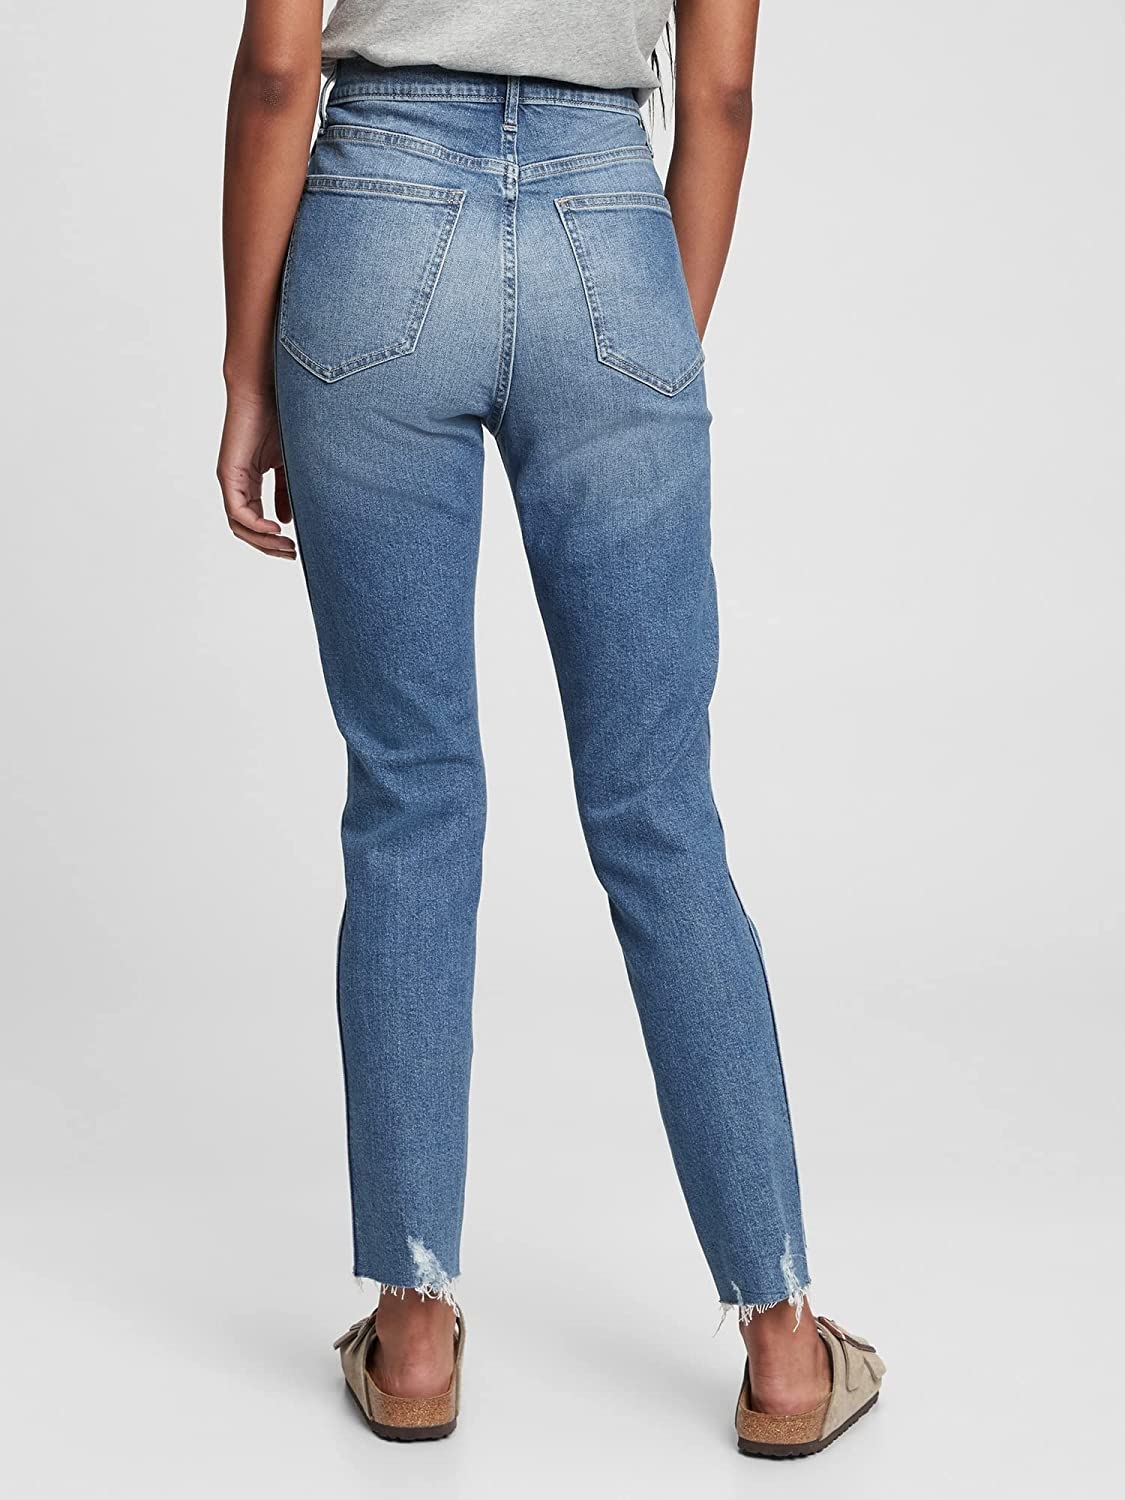 GAP Women's High Rise Vintage Slim Fit Denim Jeans - AllEars.Net